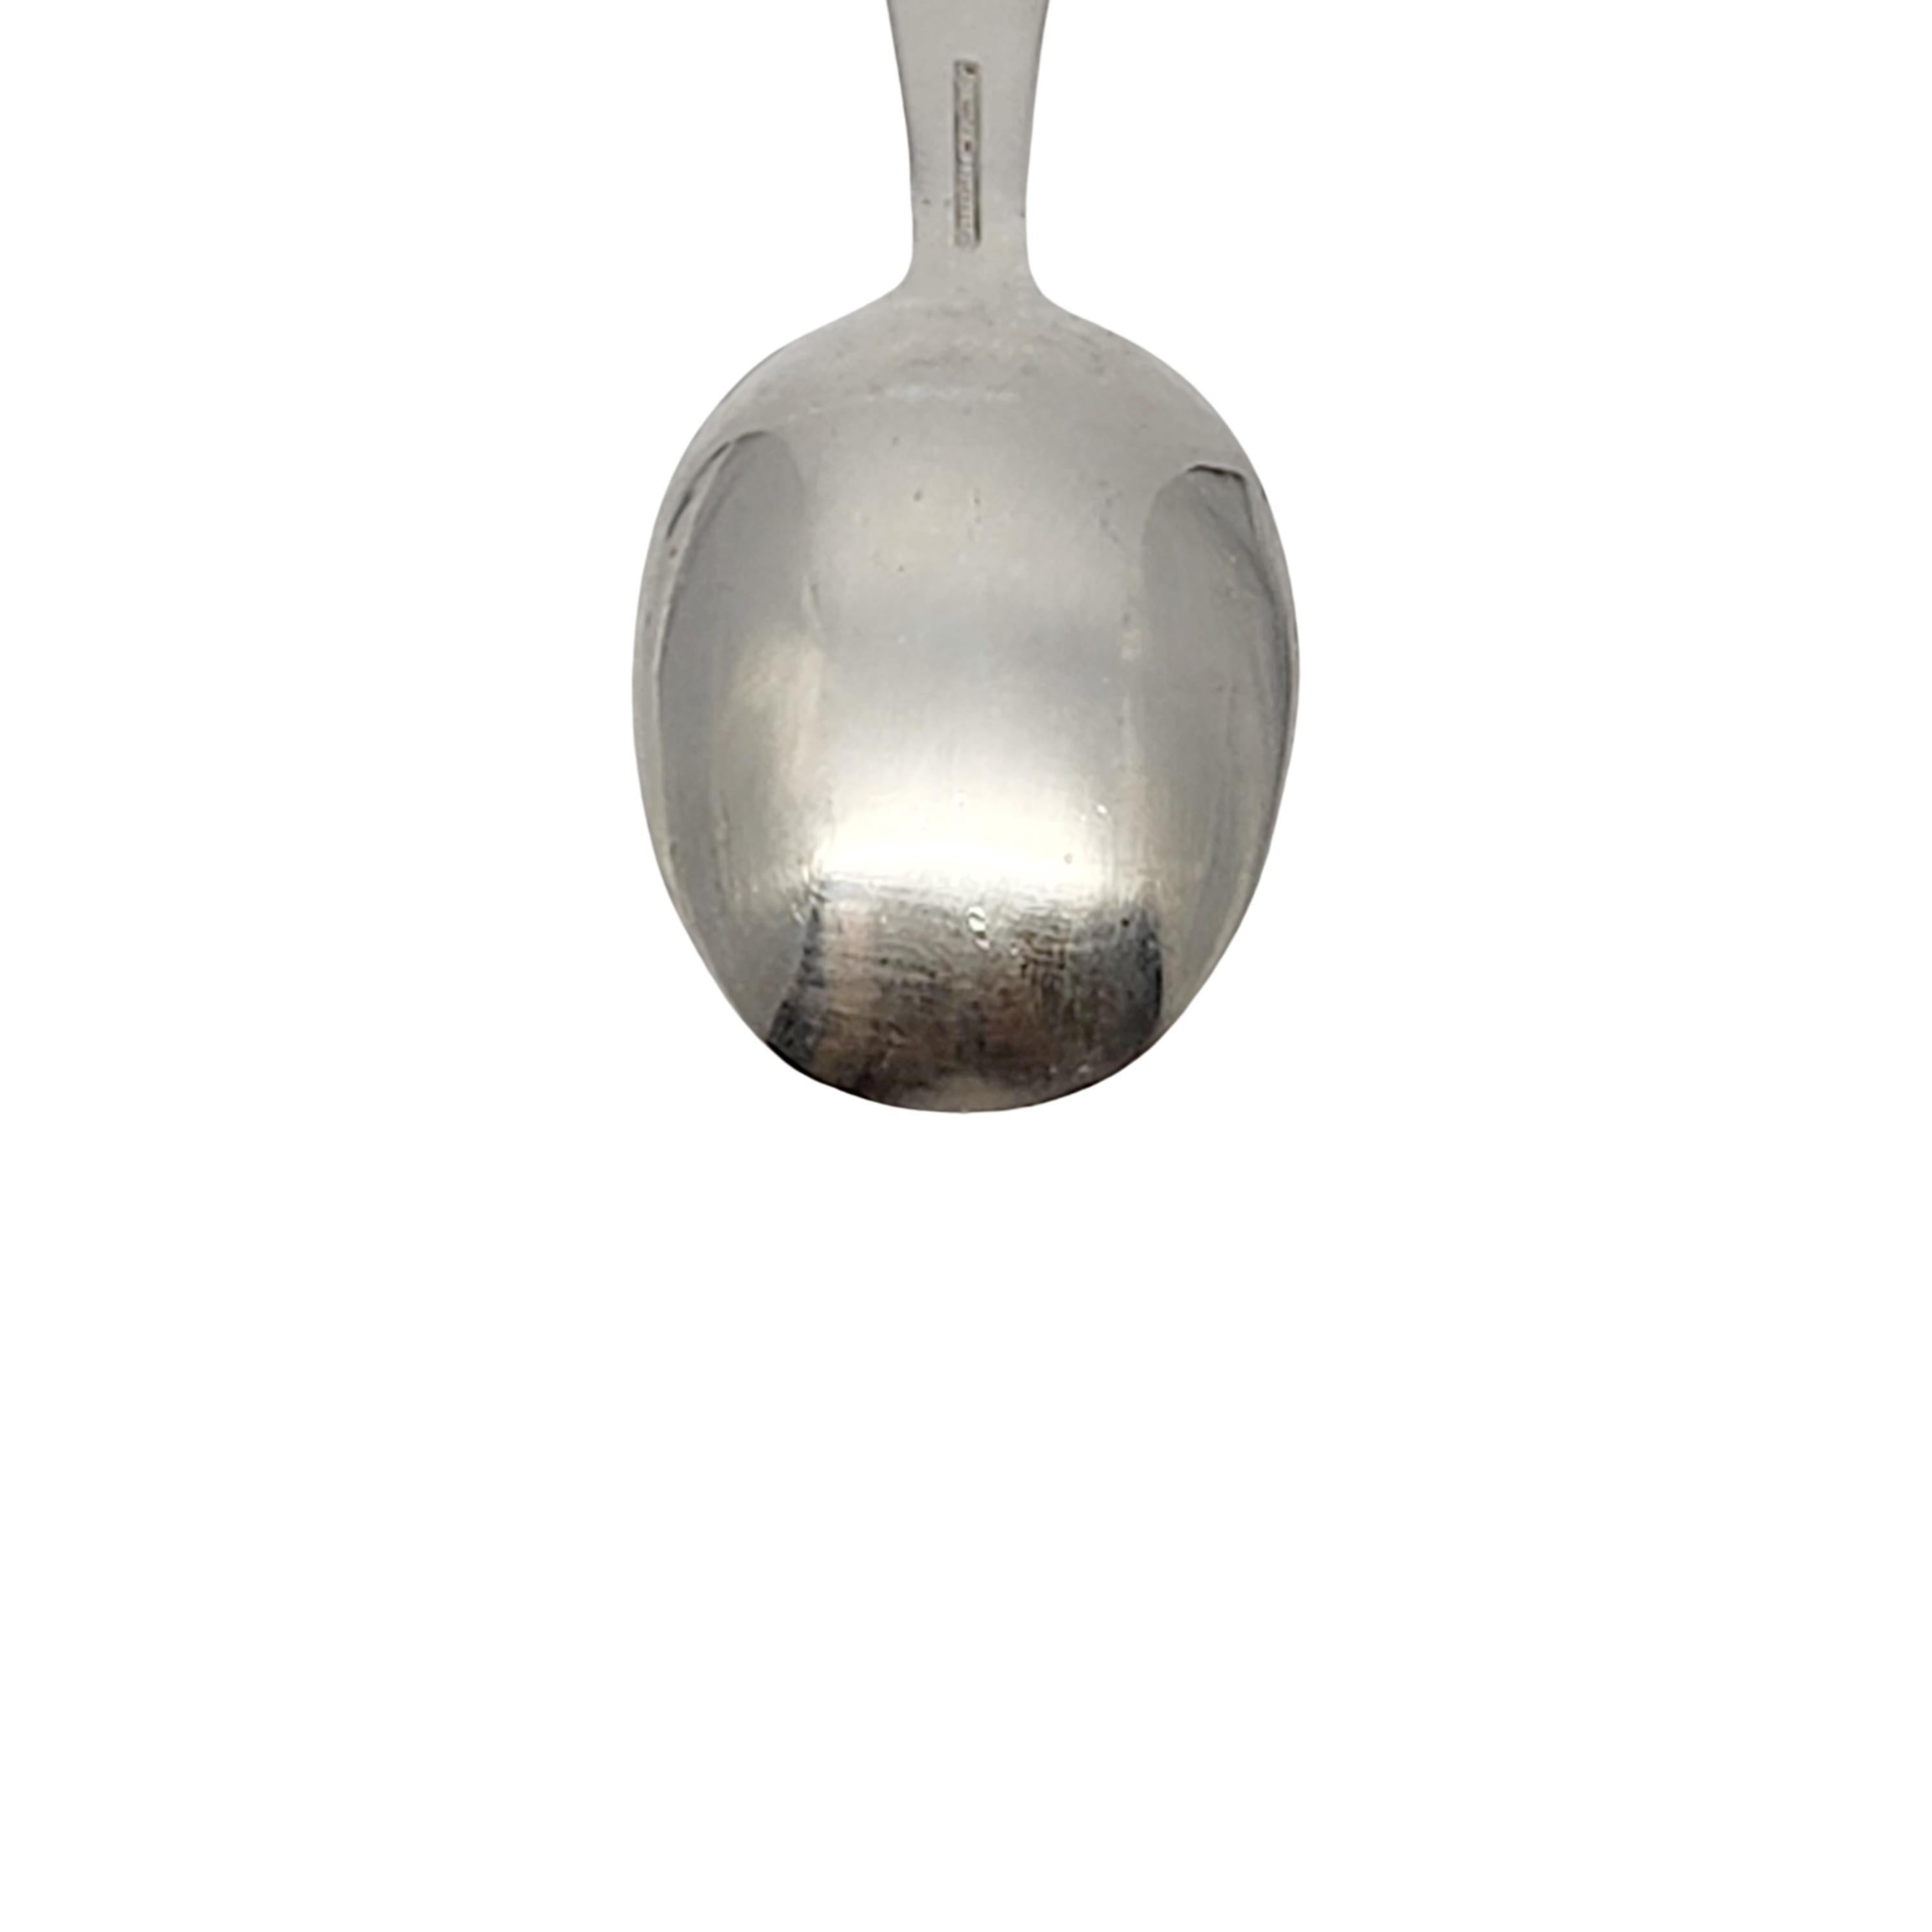 Tiffany & Co Sterling Silver Baby/Child Feeding Spoon #15492 1